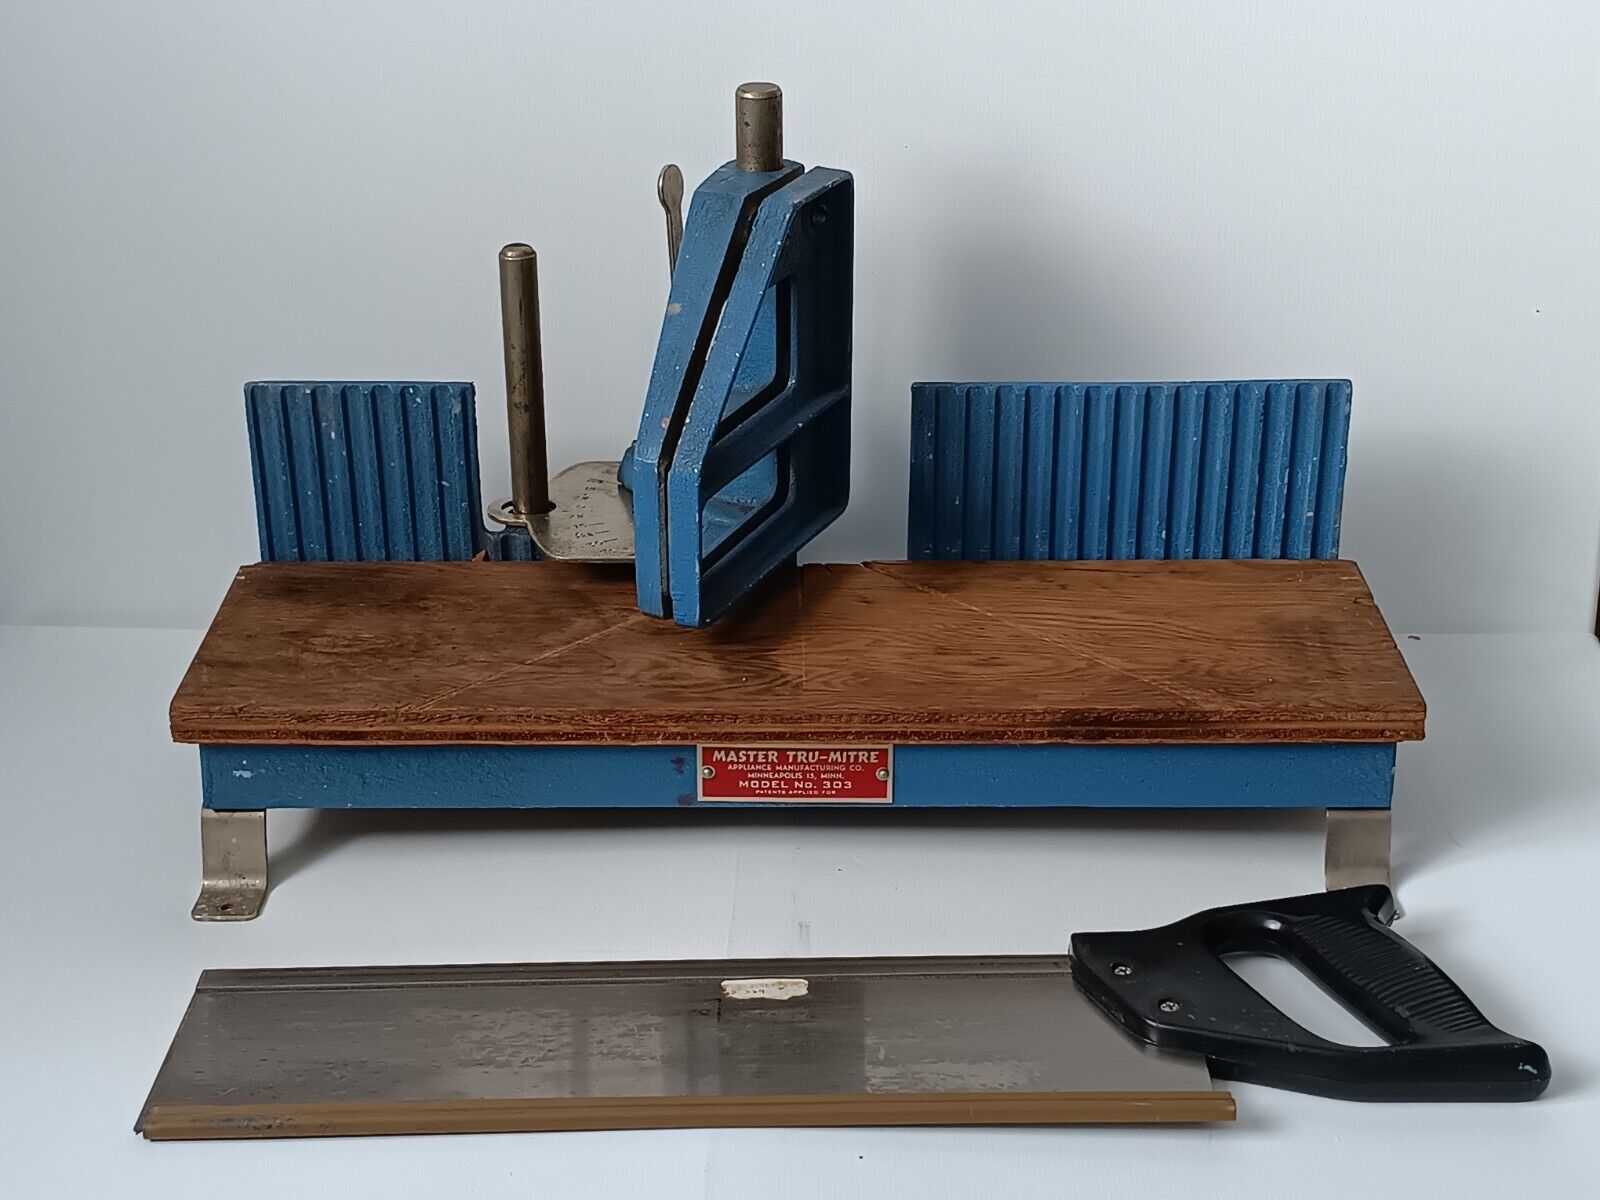 Vintage Miter Saw Master Tru-Mitre Model 303 Jigsaw Manual Appliance